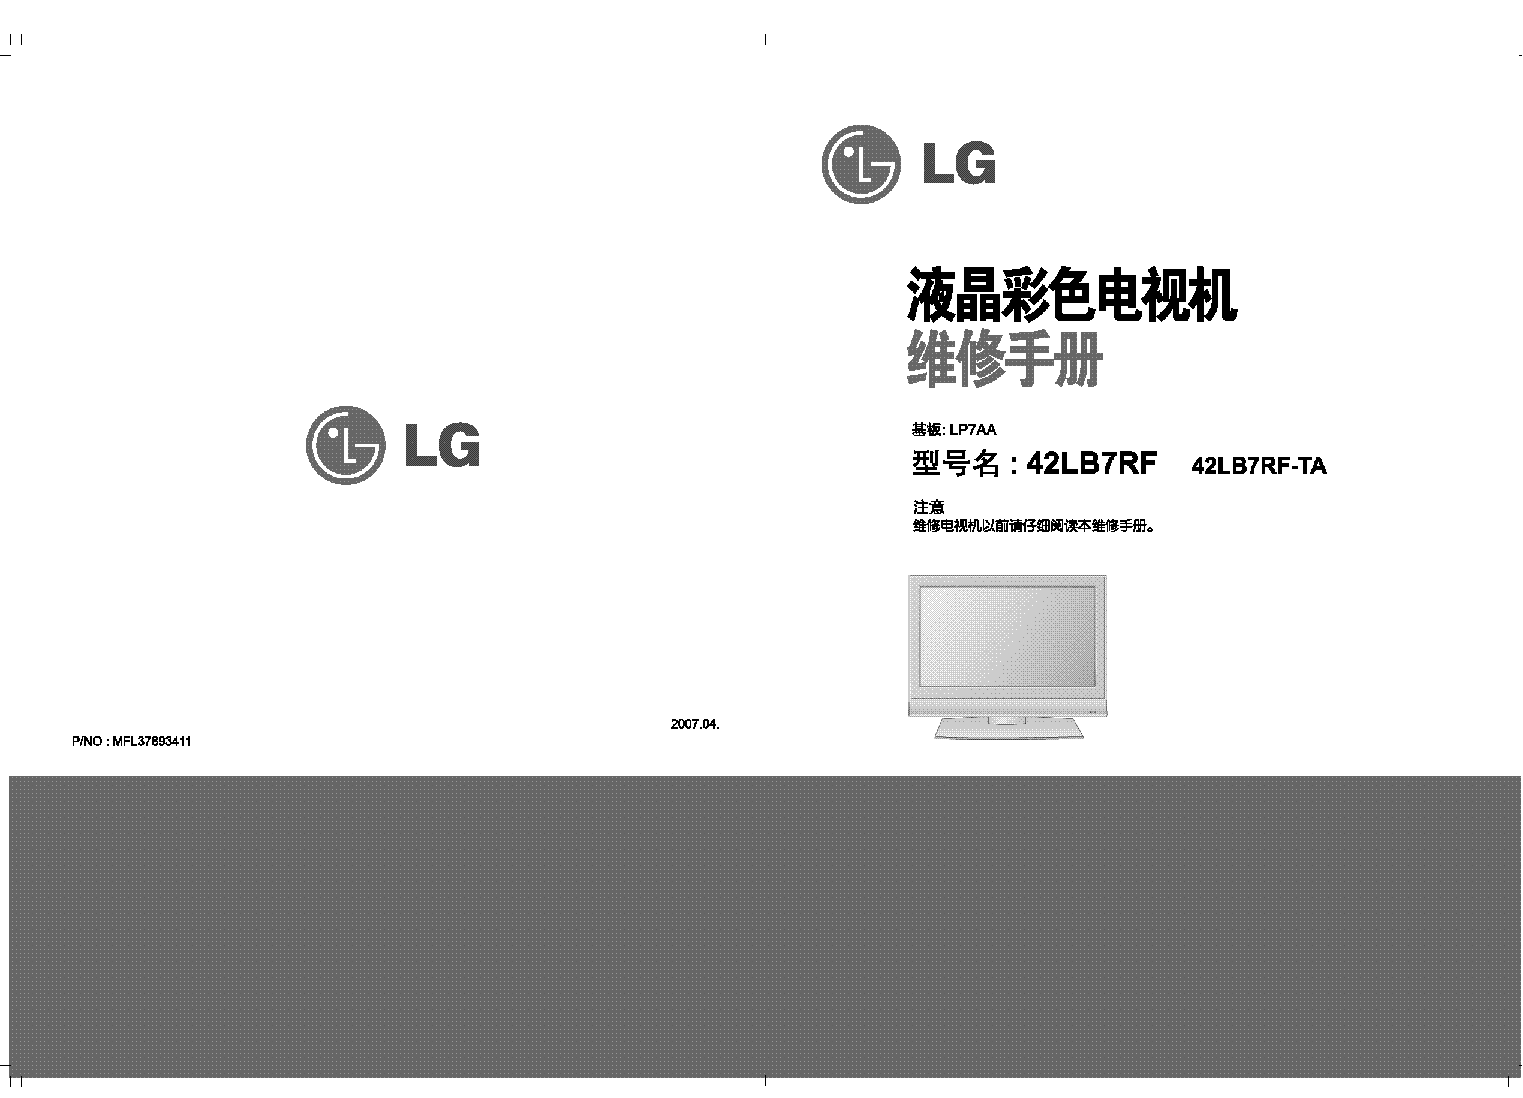 LG 42LB7RF-TA CHASSIS LP7AA service manual (1st page)